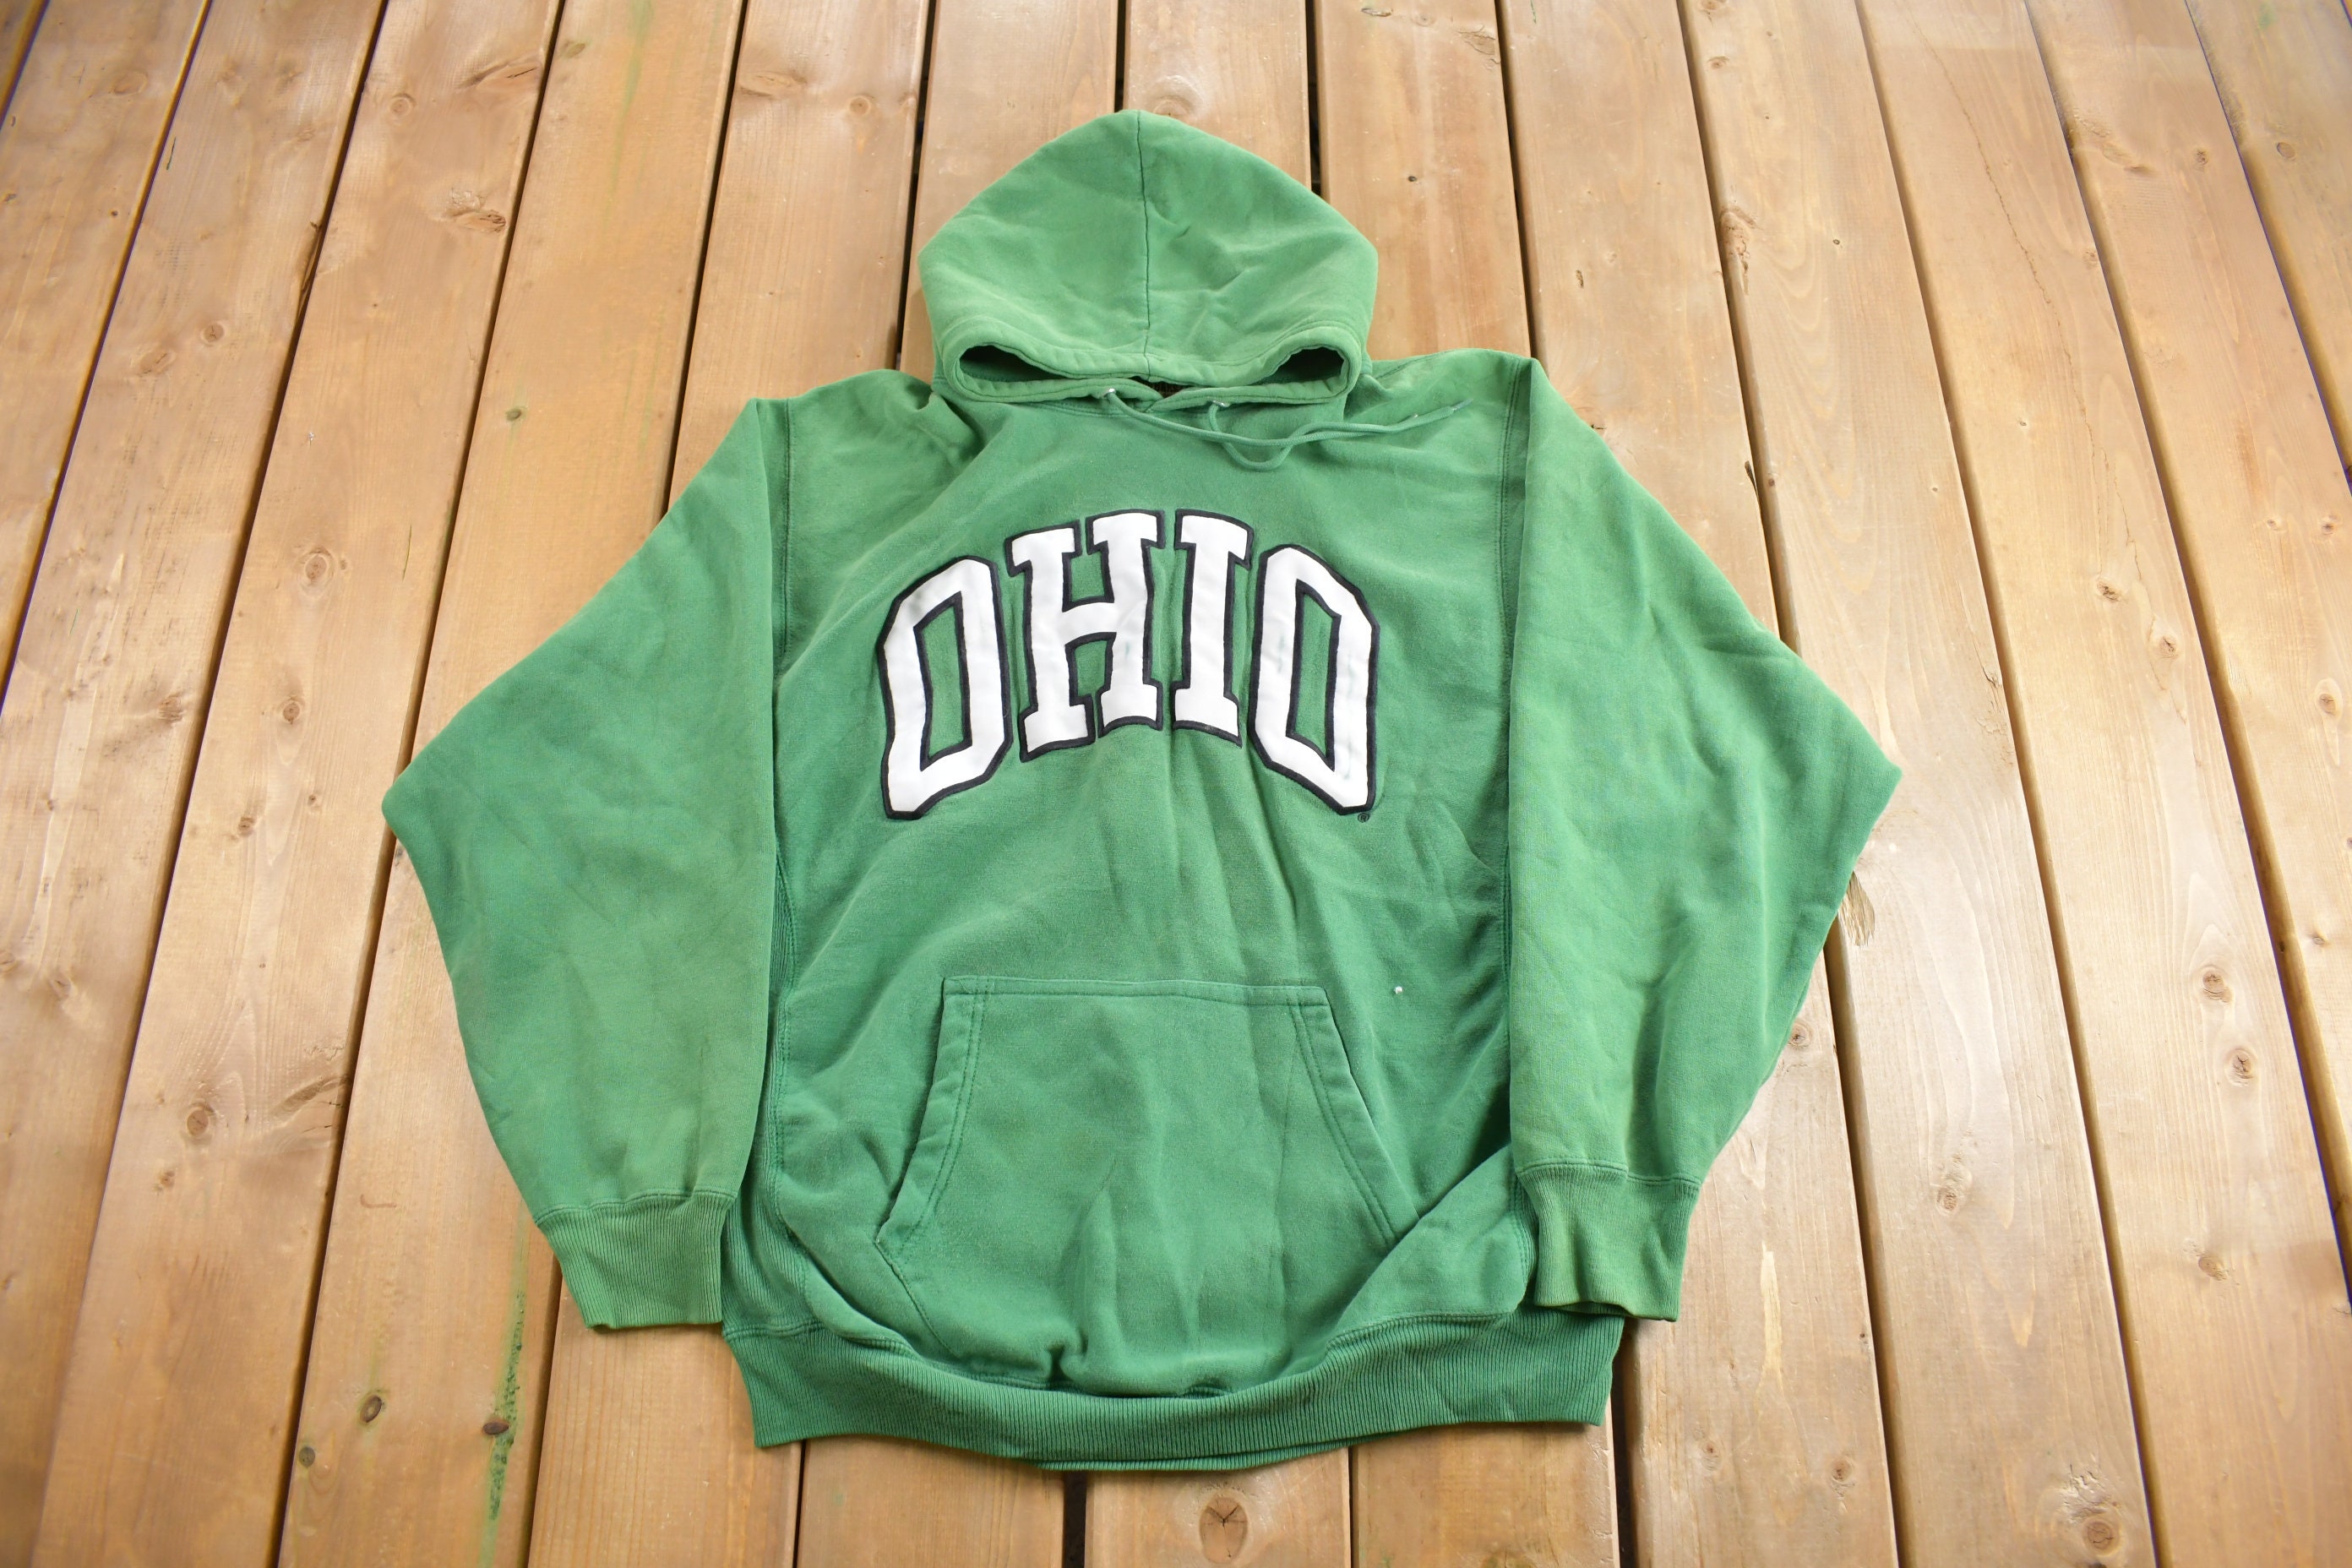 Ohio University Classic Green Hoodie